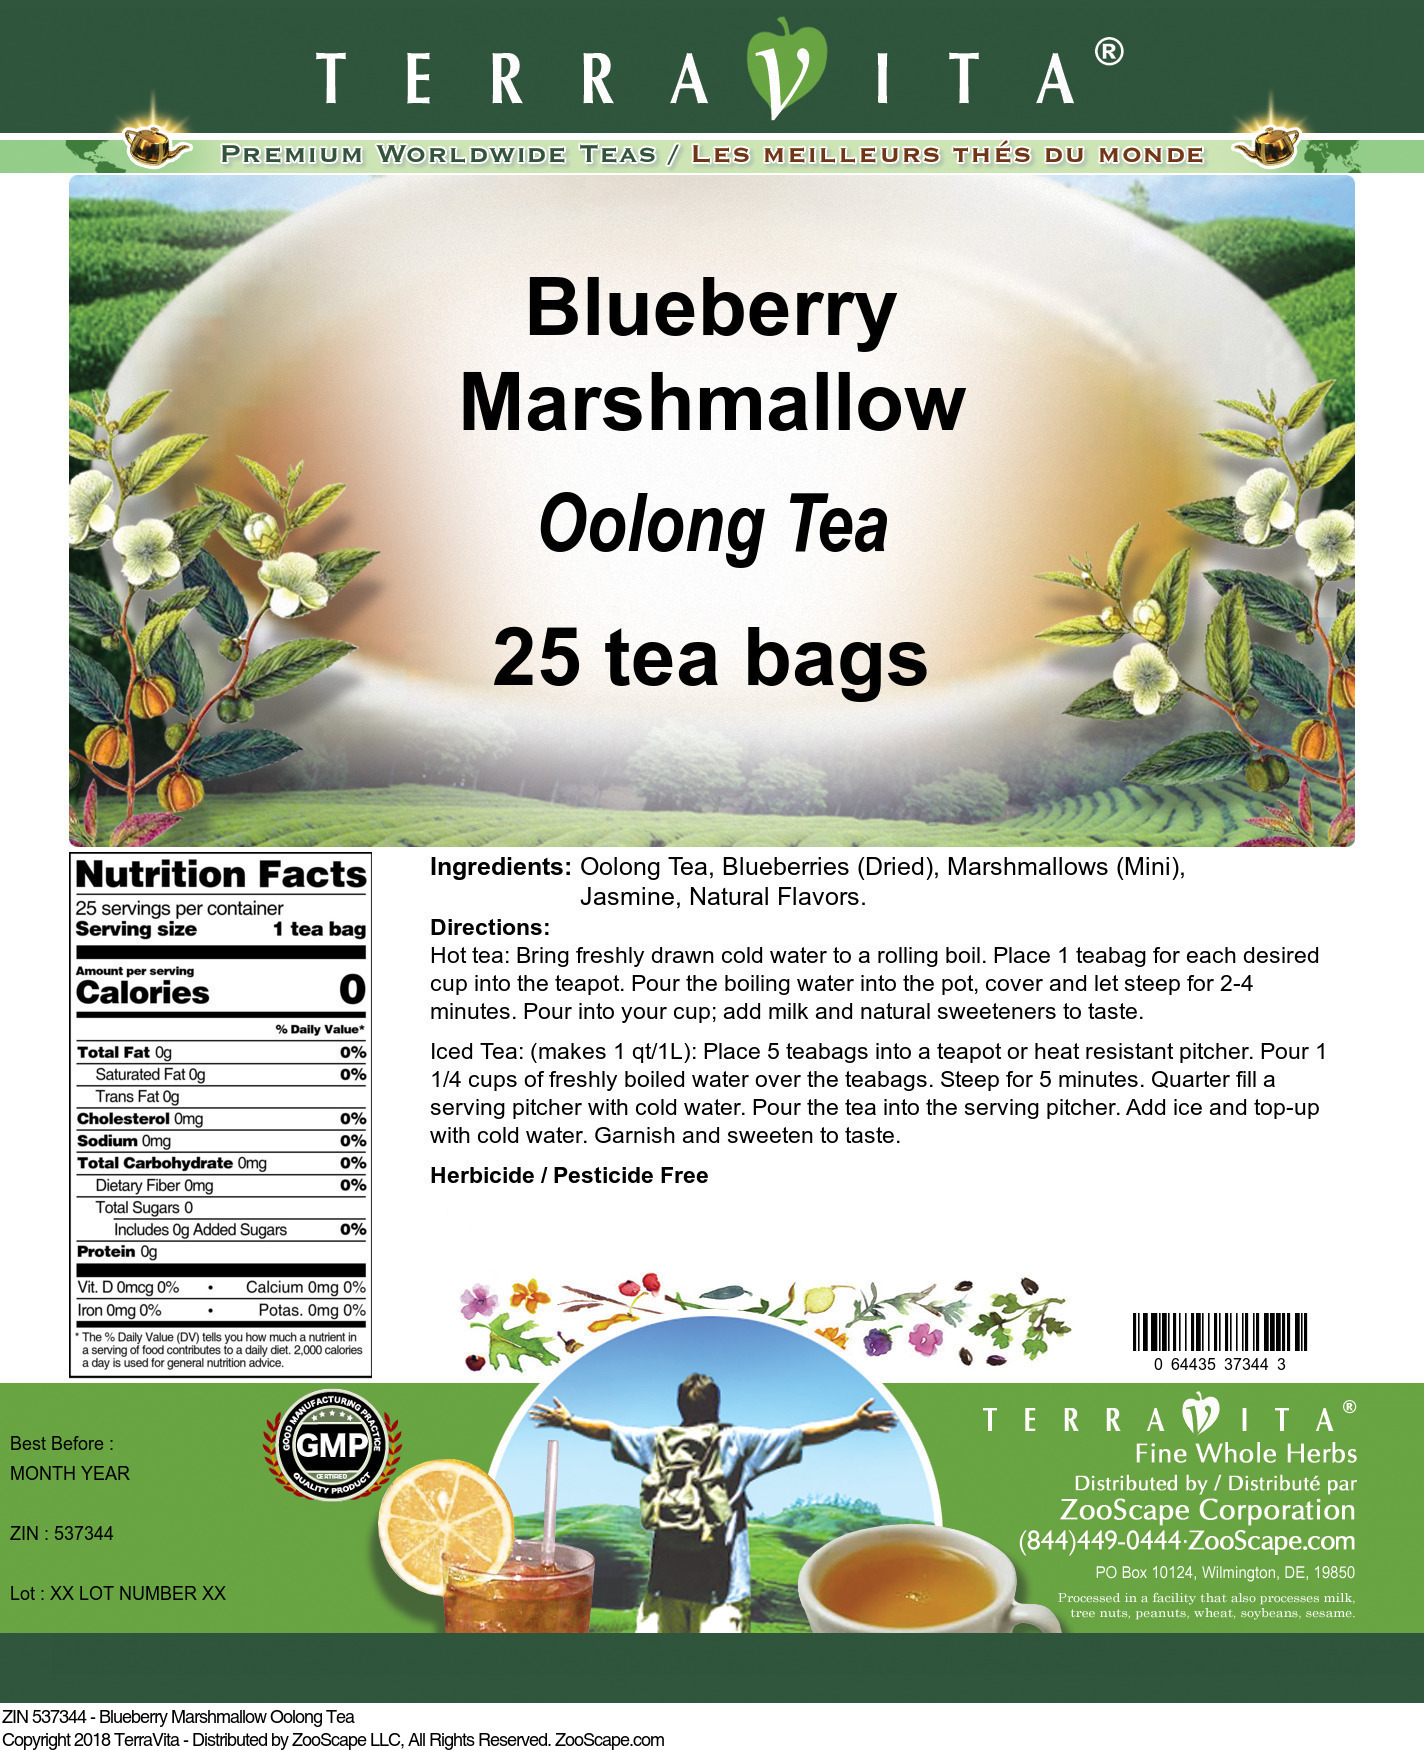 Blueberry Marshmallow Oolong Tea - Label